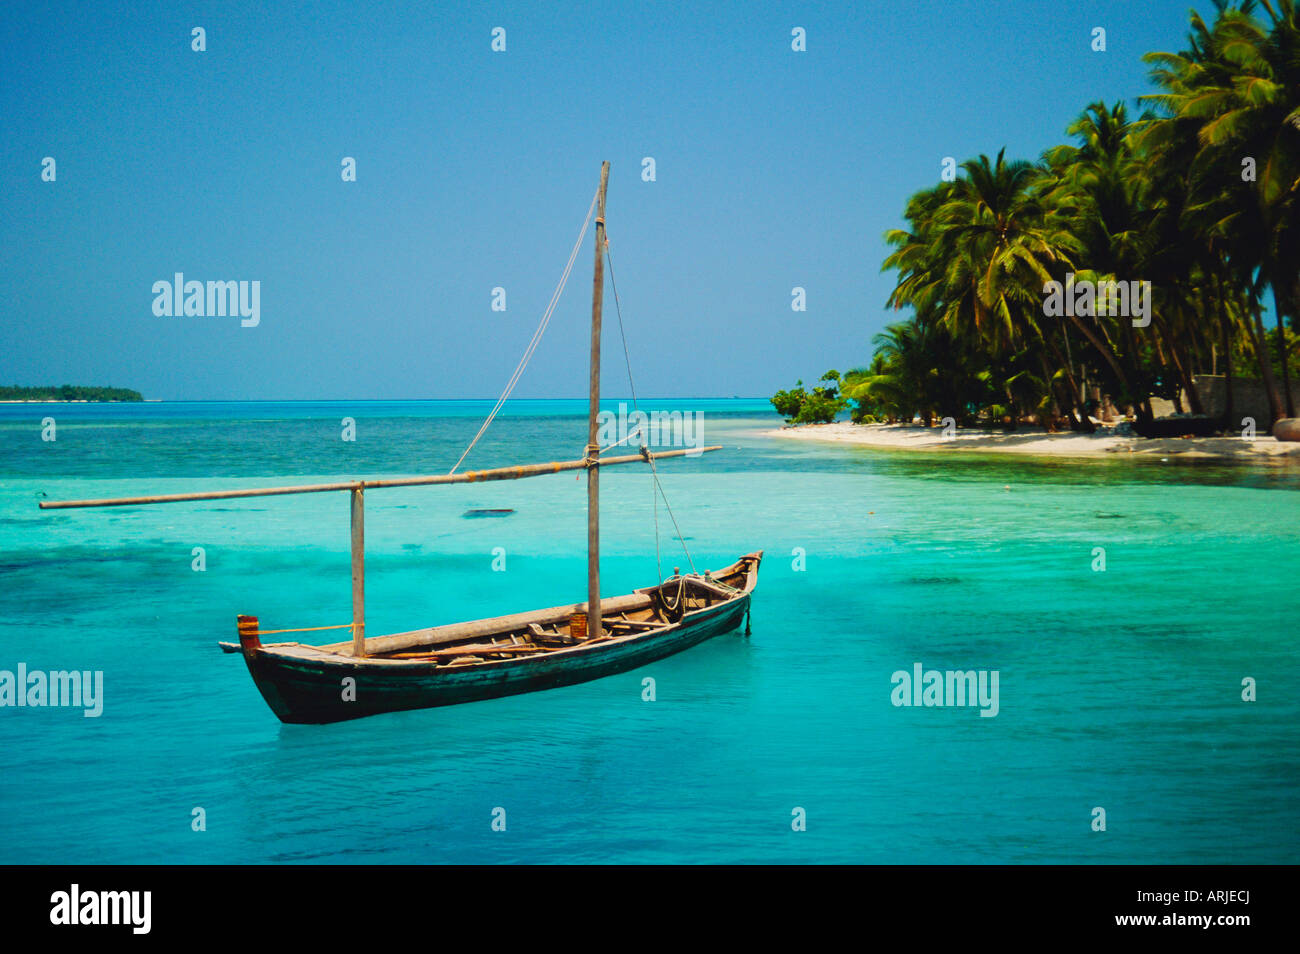 The island of Guriadu, Maldives Stock Photo